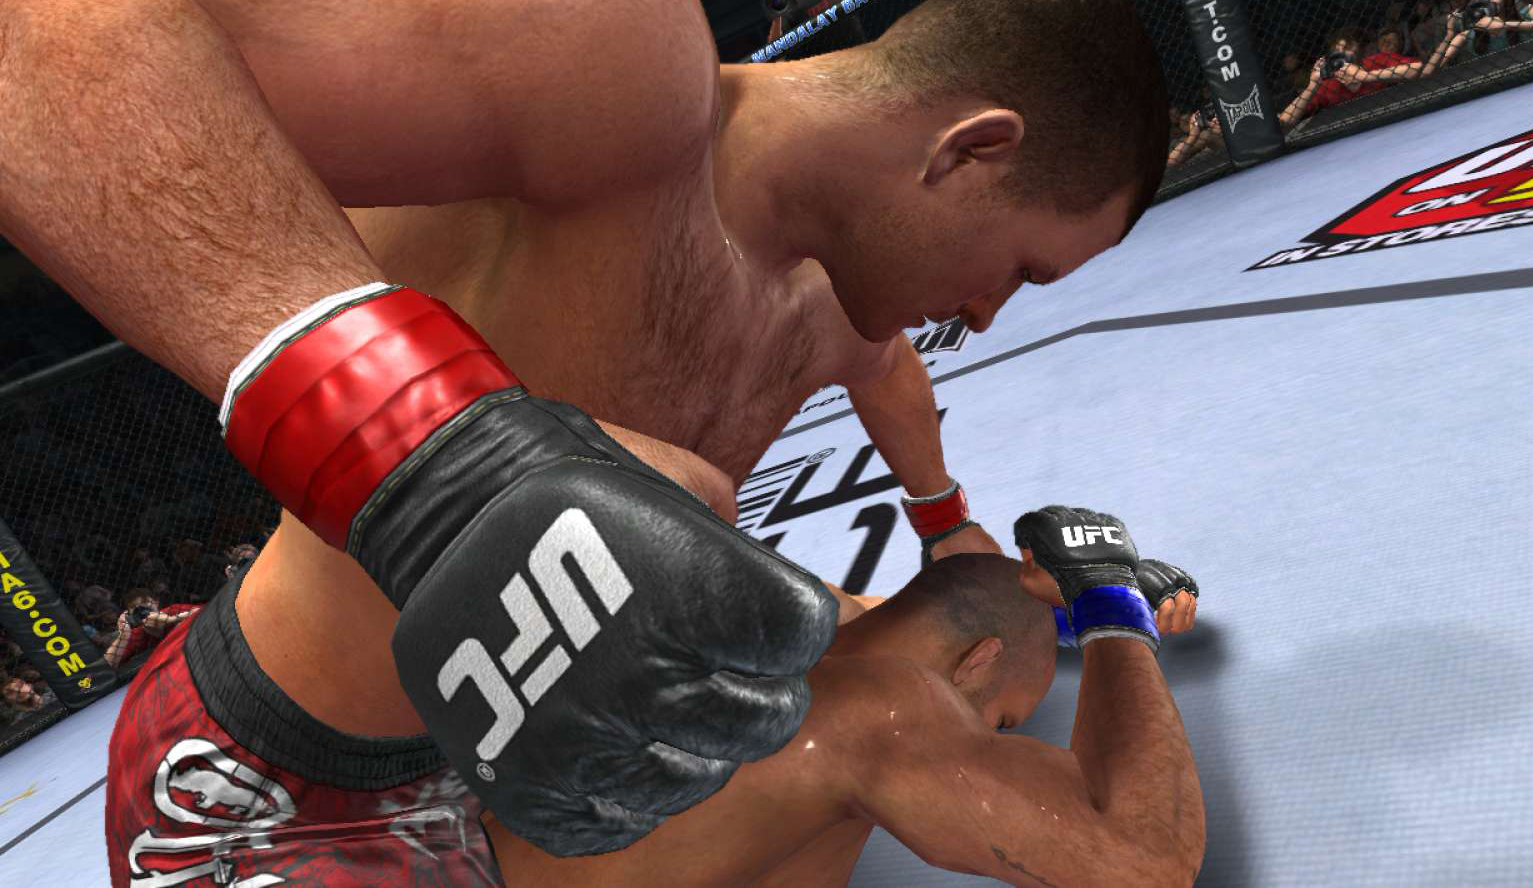 UFC Undisputed 3 vs UFC 2010 screenshots of the Glove